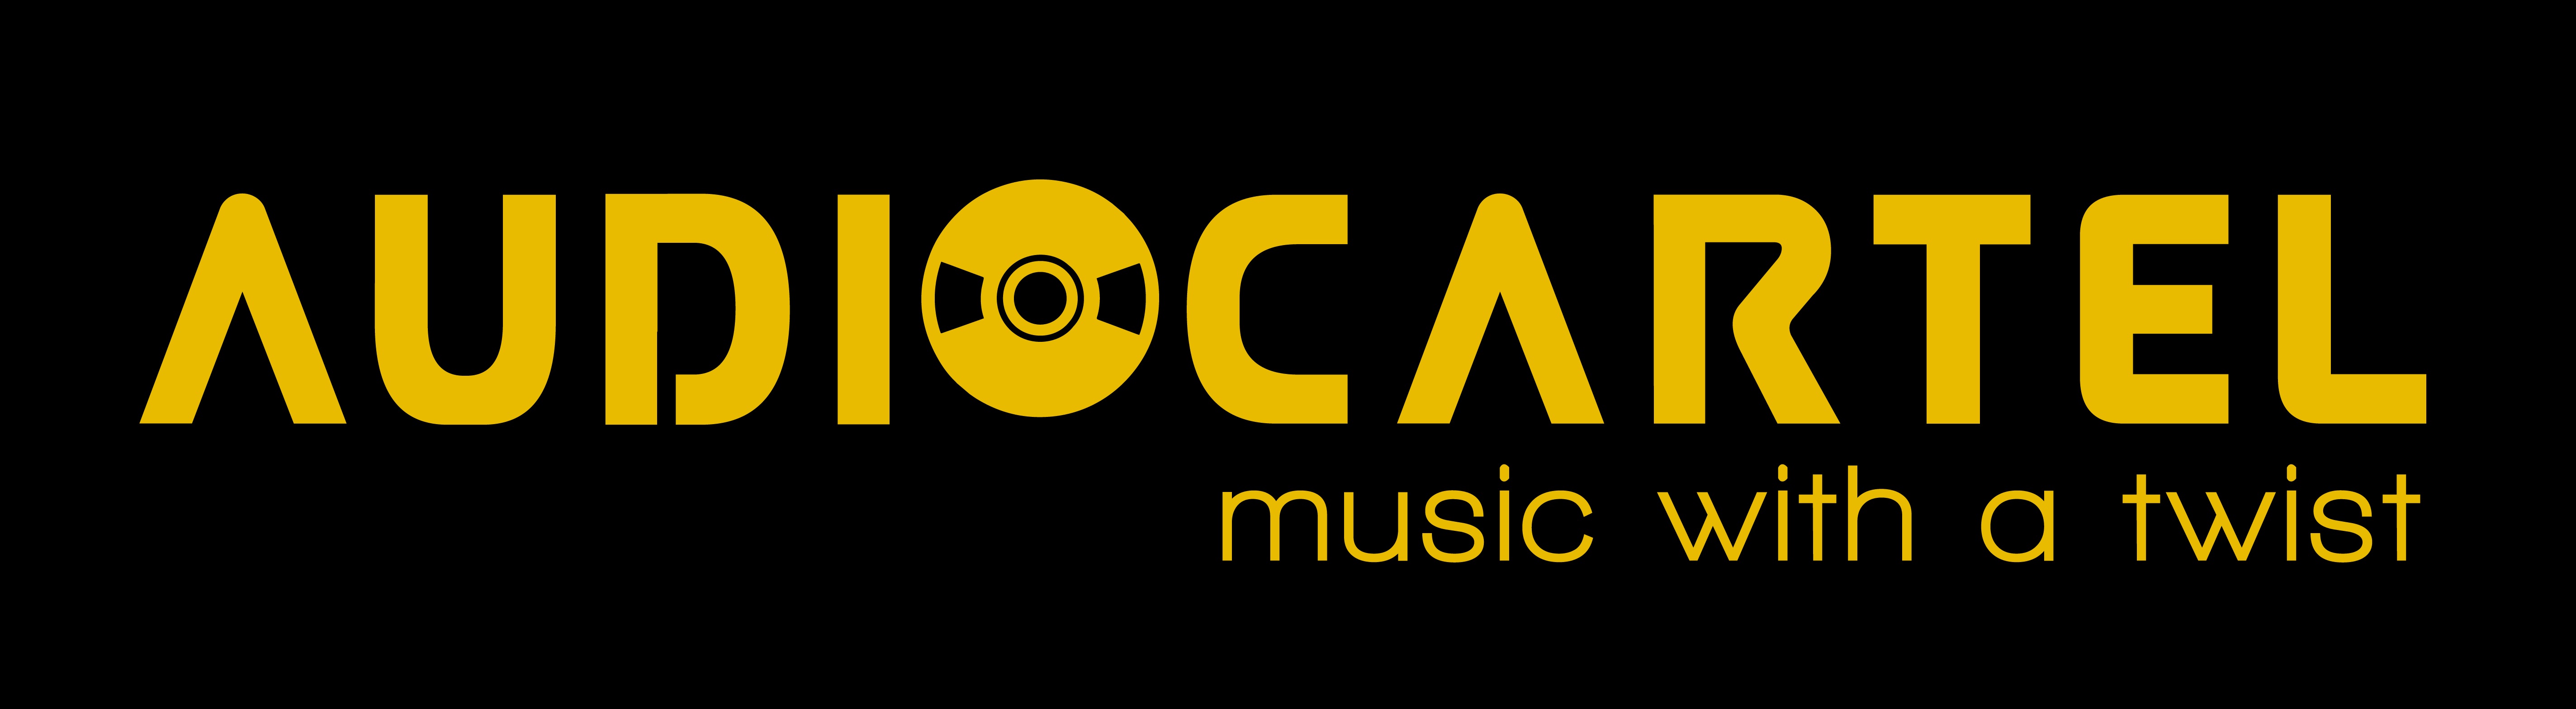 Audio Cartel logo